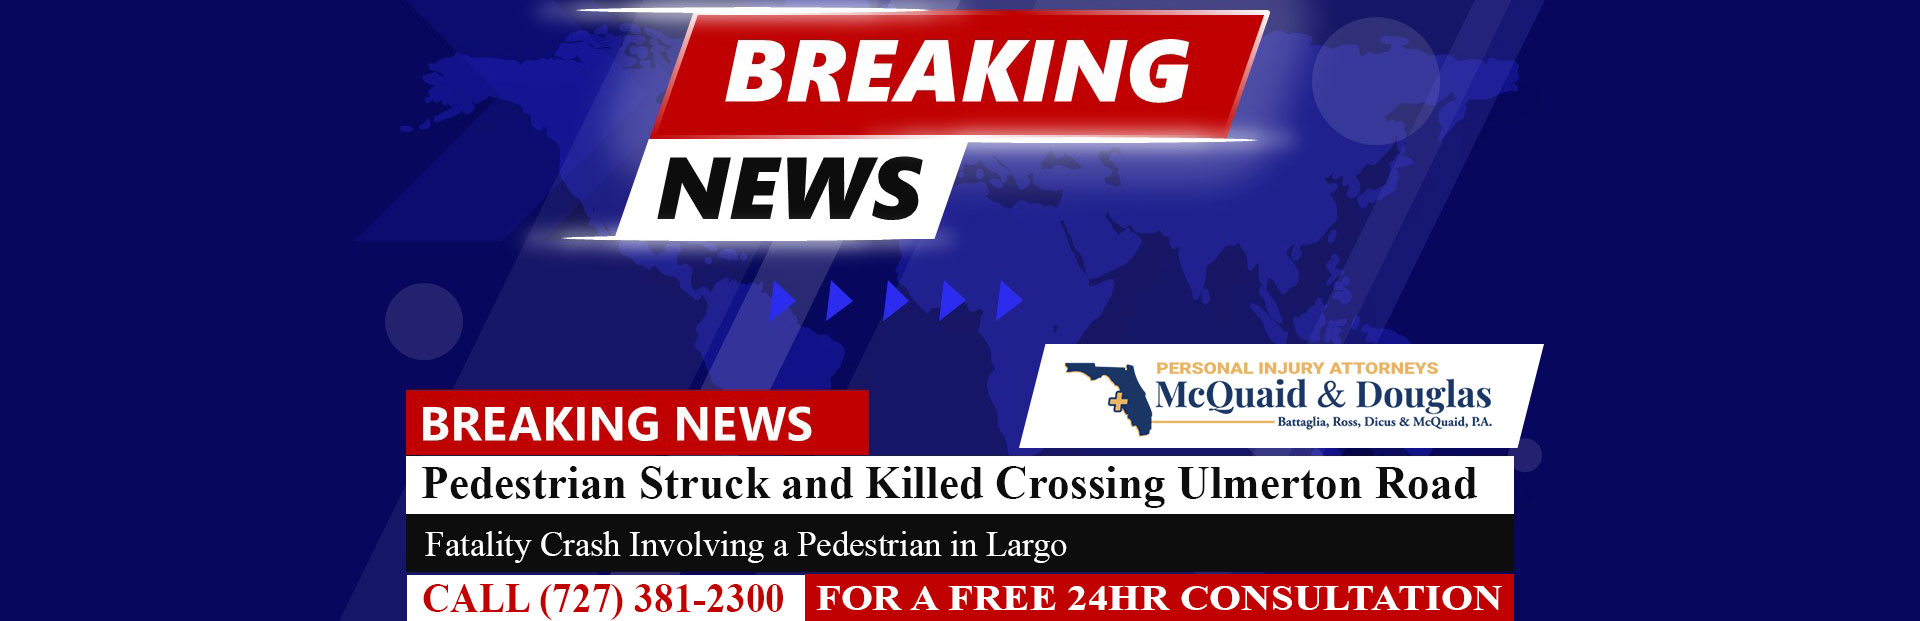 [01-11-23] Pedestrian Struck and Killed Crossing Ulmerton Road in Largo